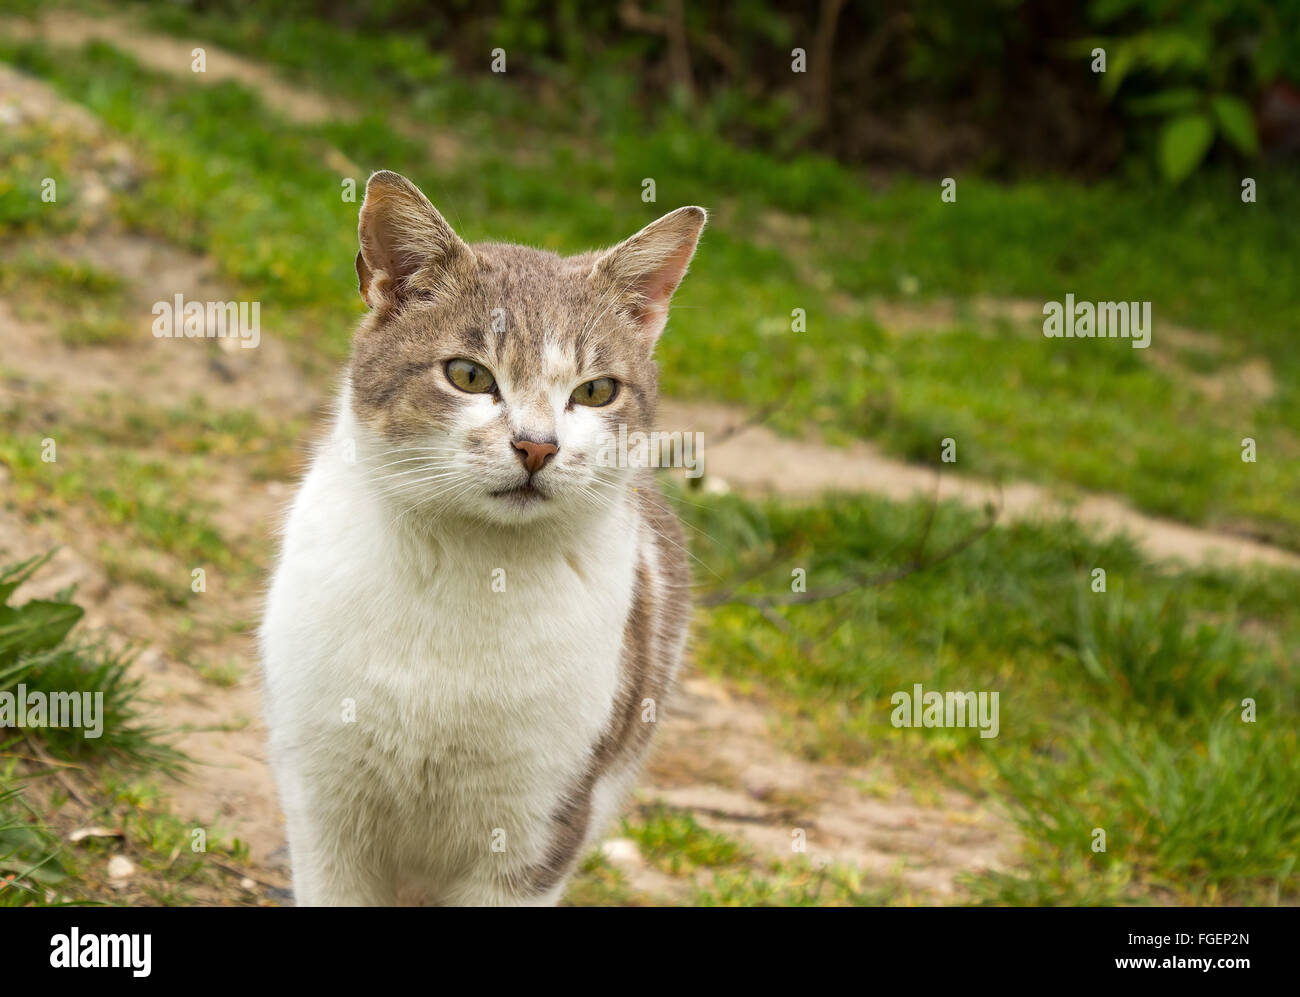 Cat outdoor in nature Stock Photo